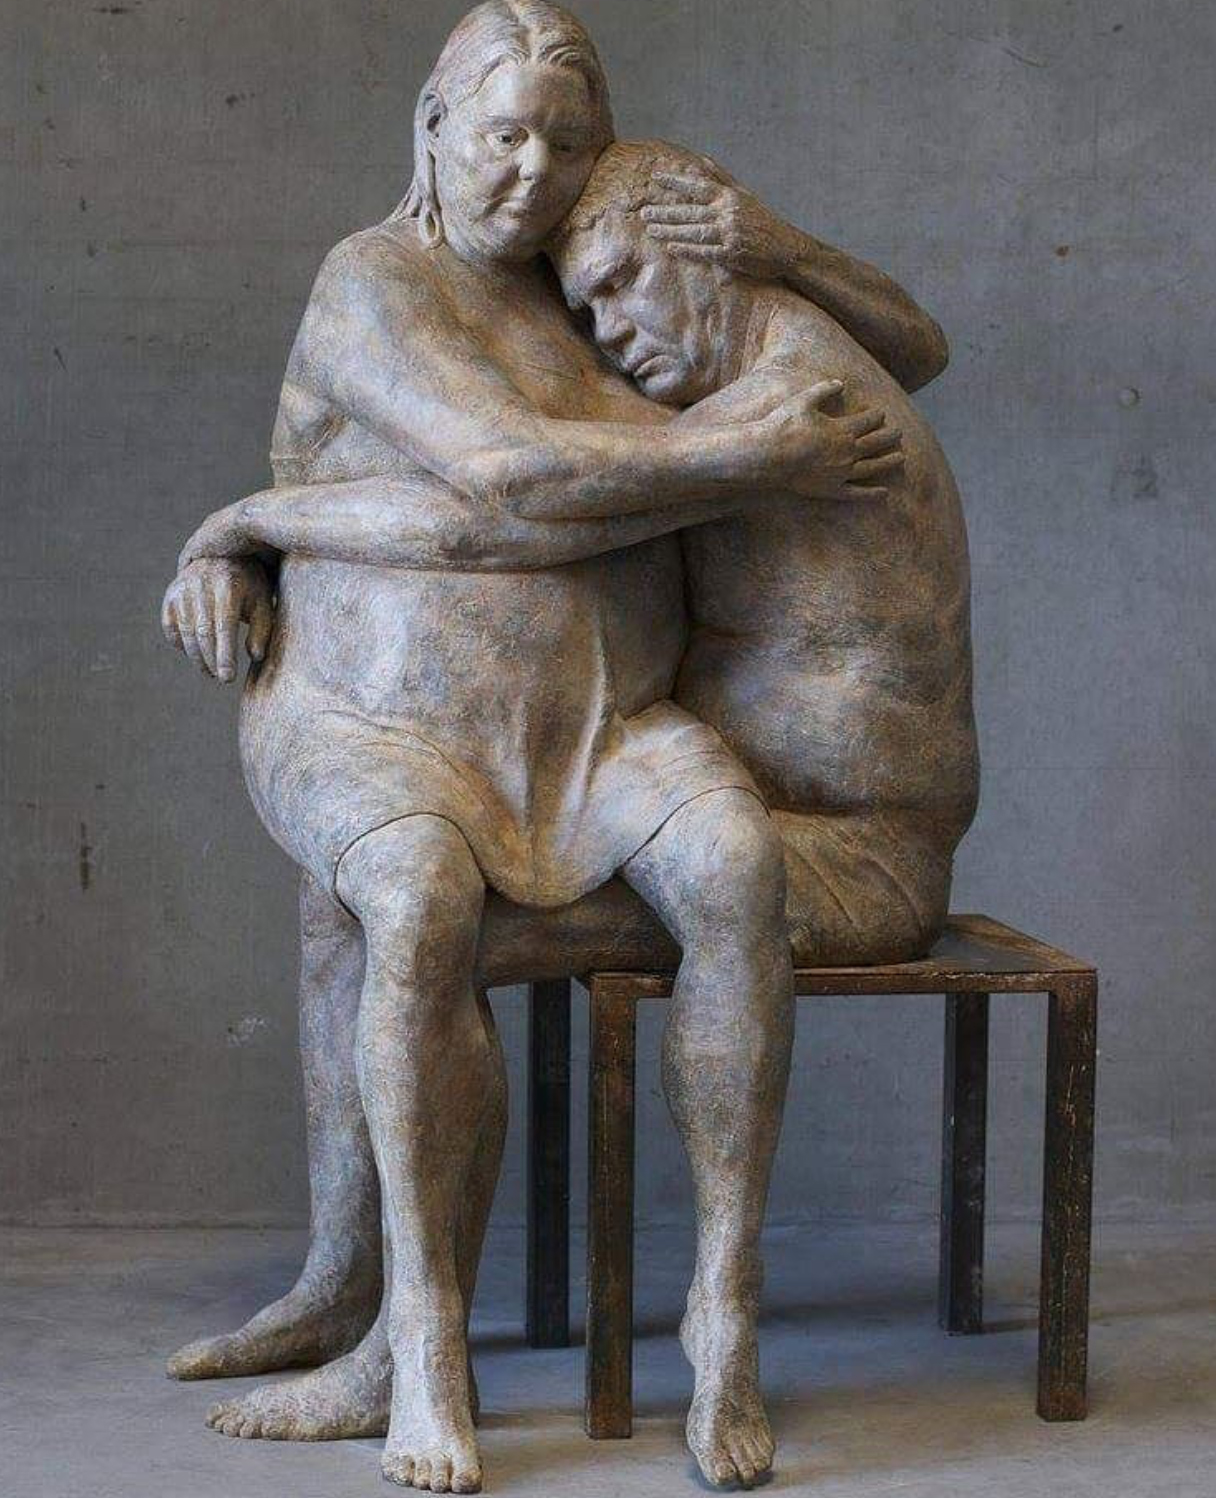 Love sculpture museum works